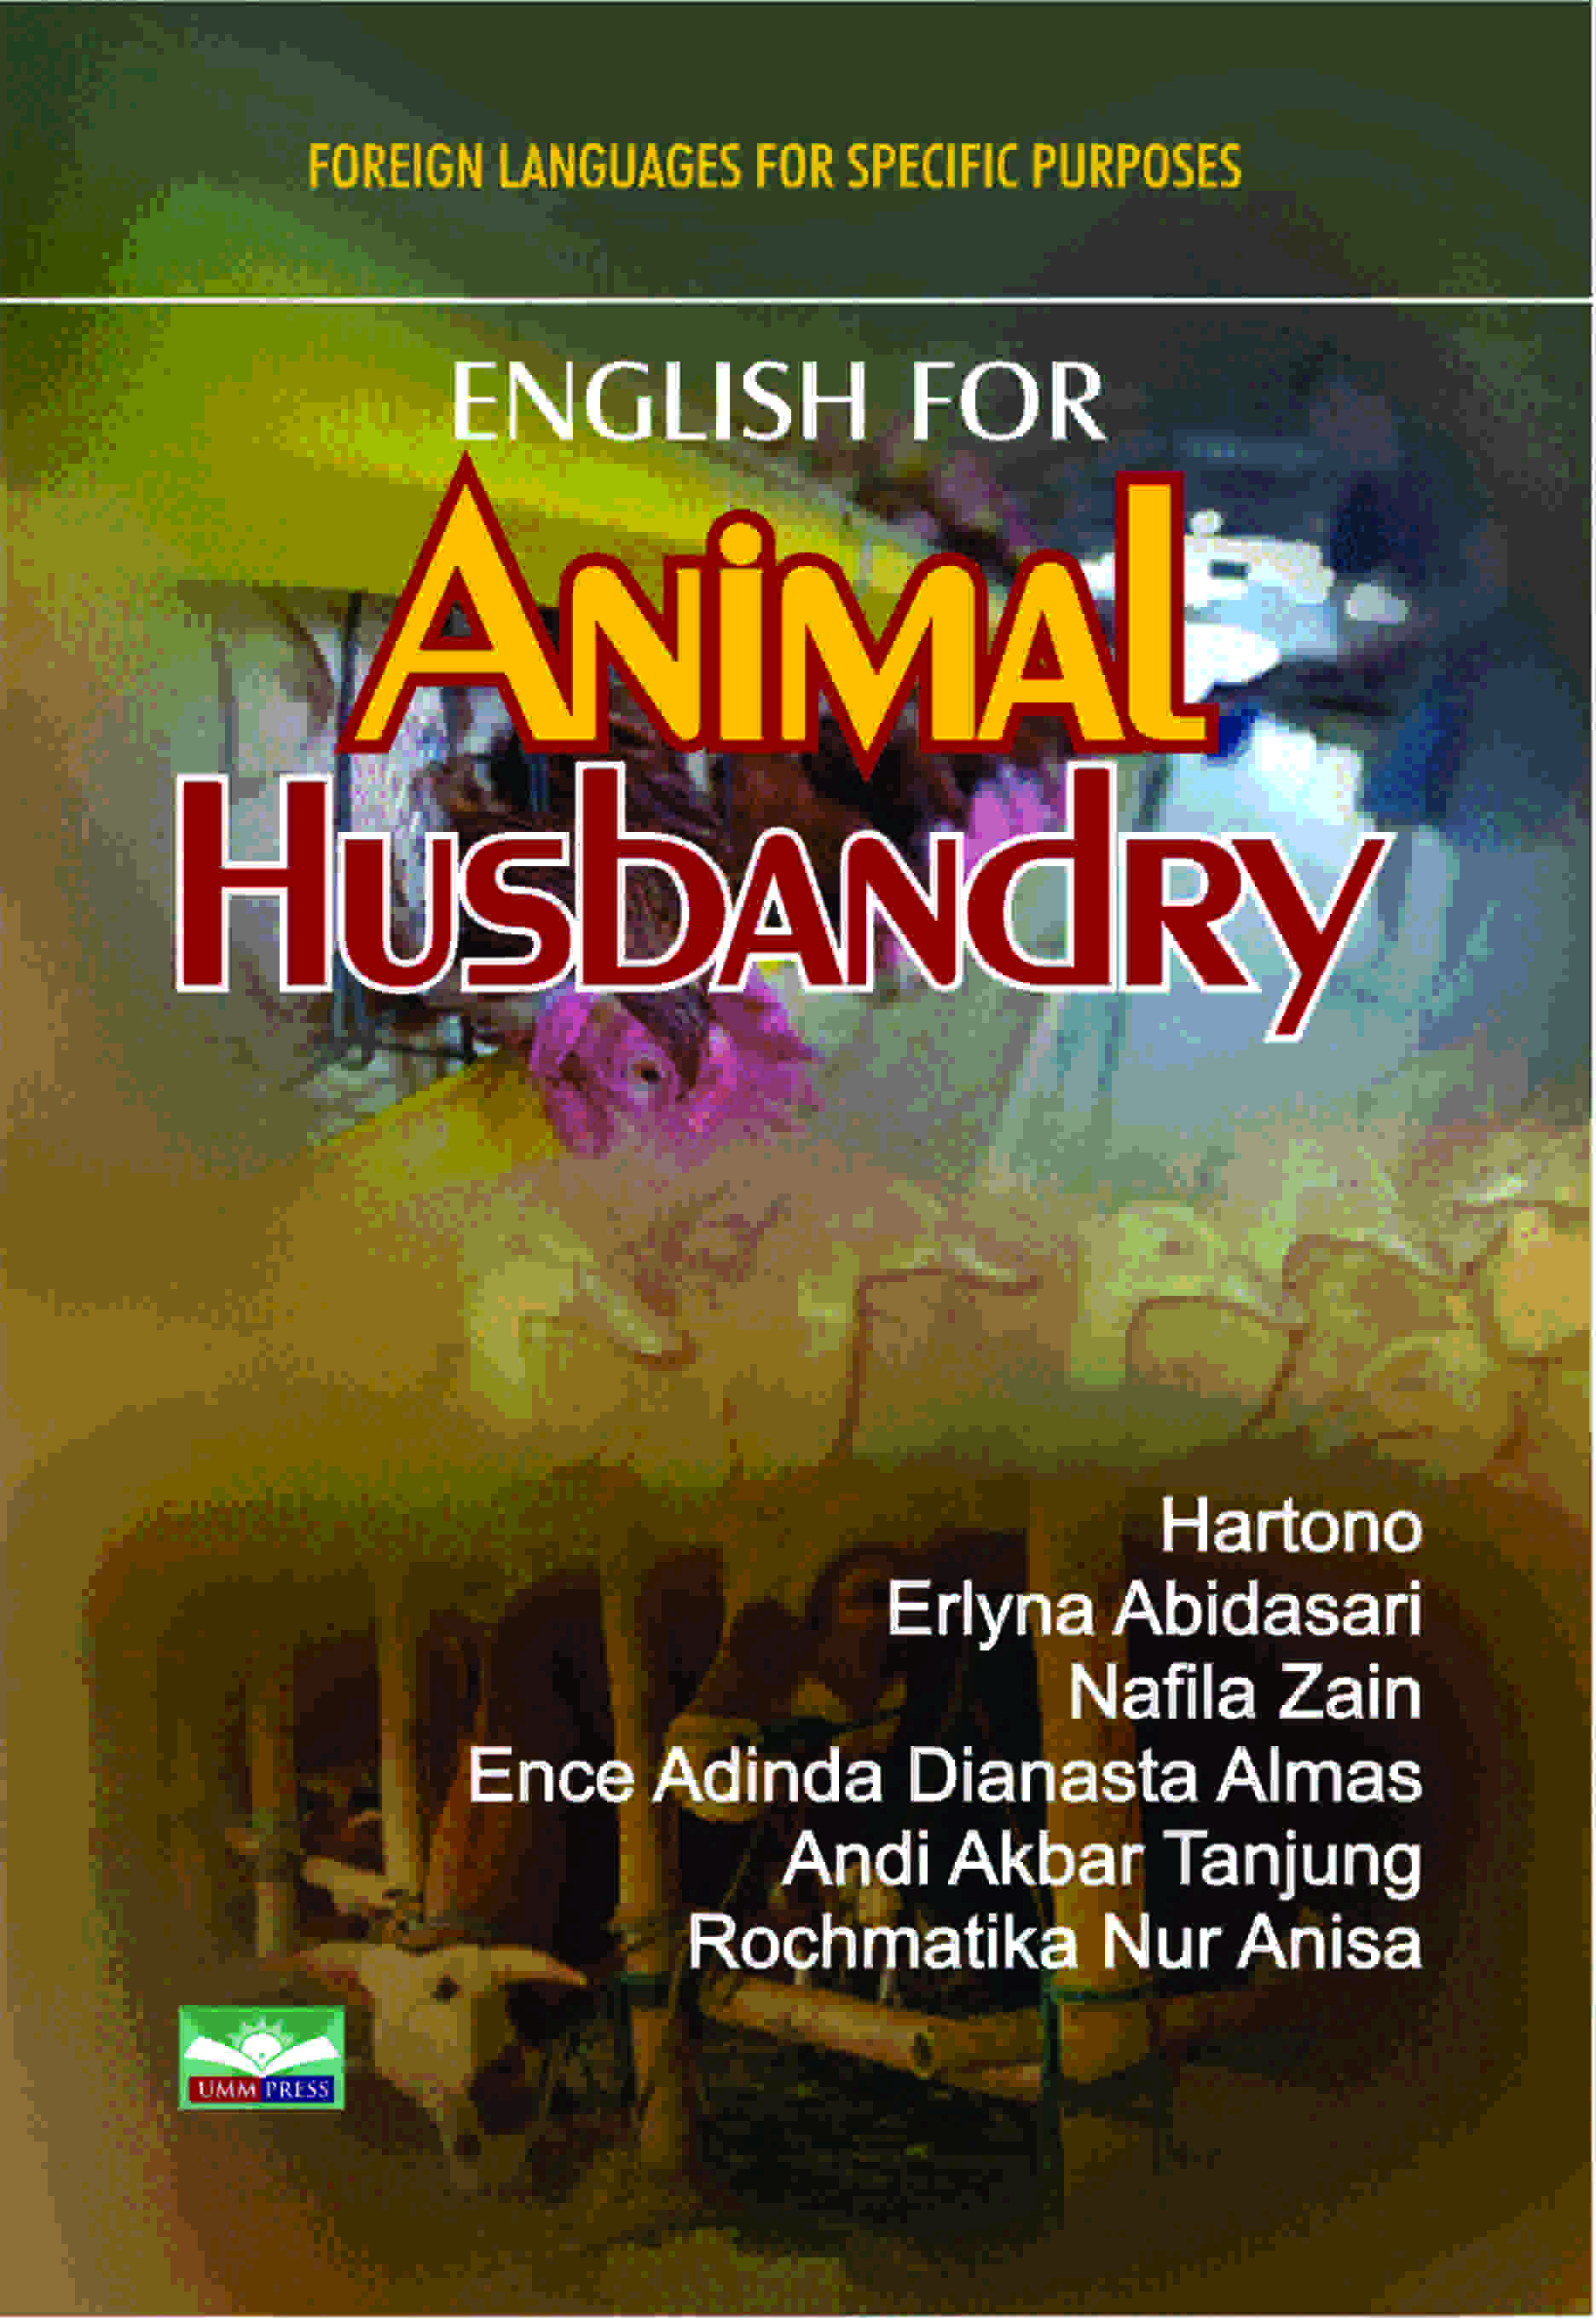 flsp-english-for-animal-husbandry